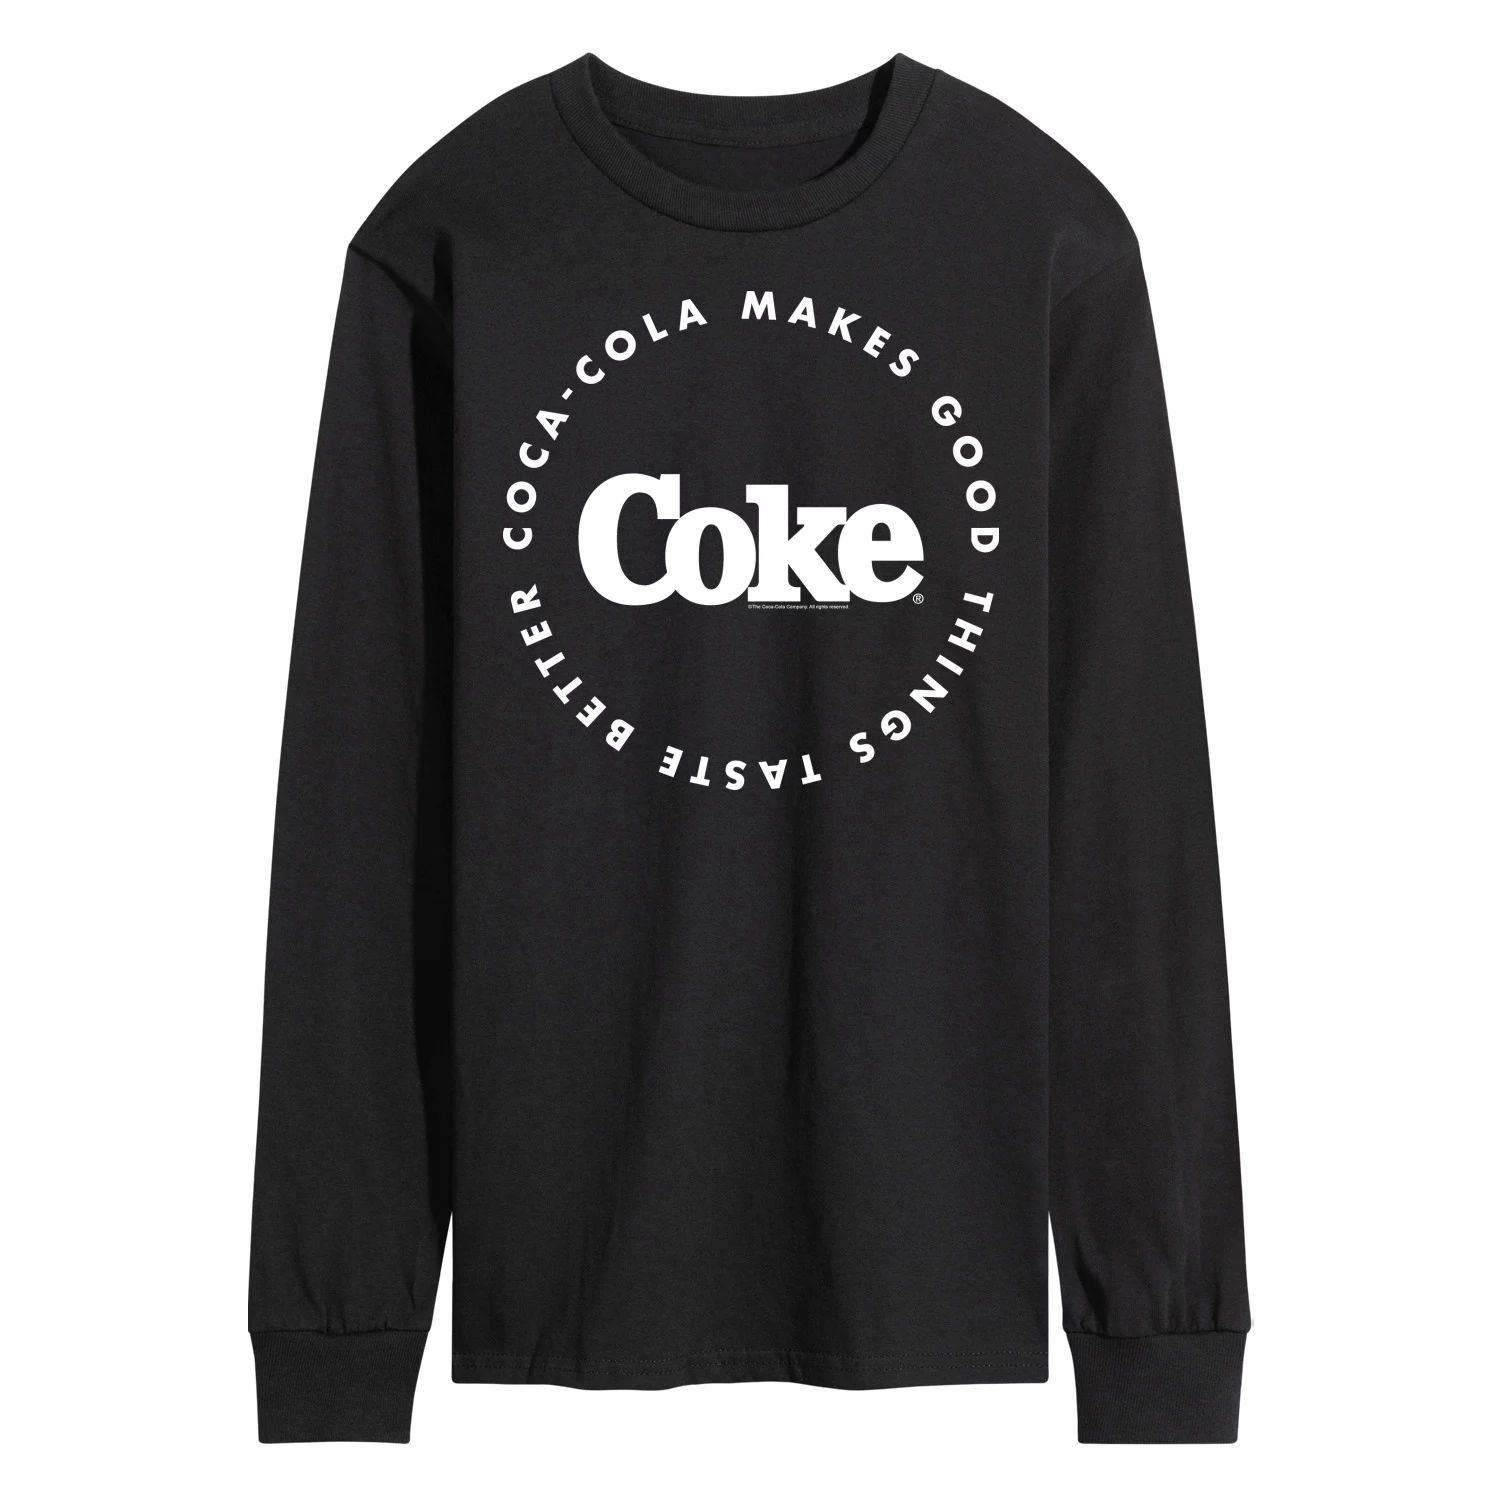 Мужская футболка с рисунком Coca-Cola Coke делает вкус лучше Licensed Character